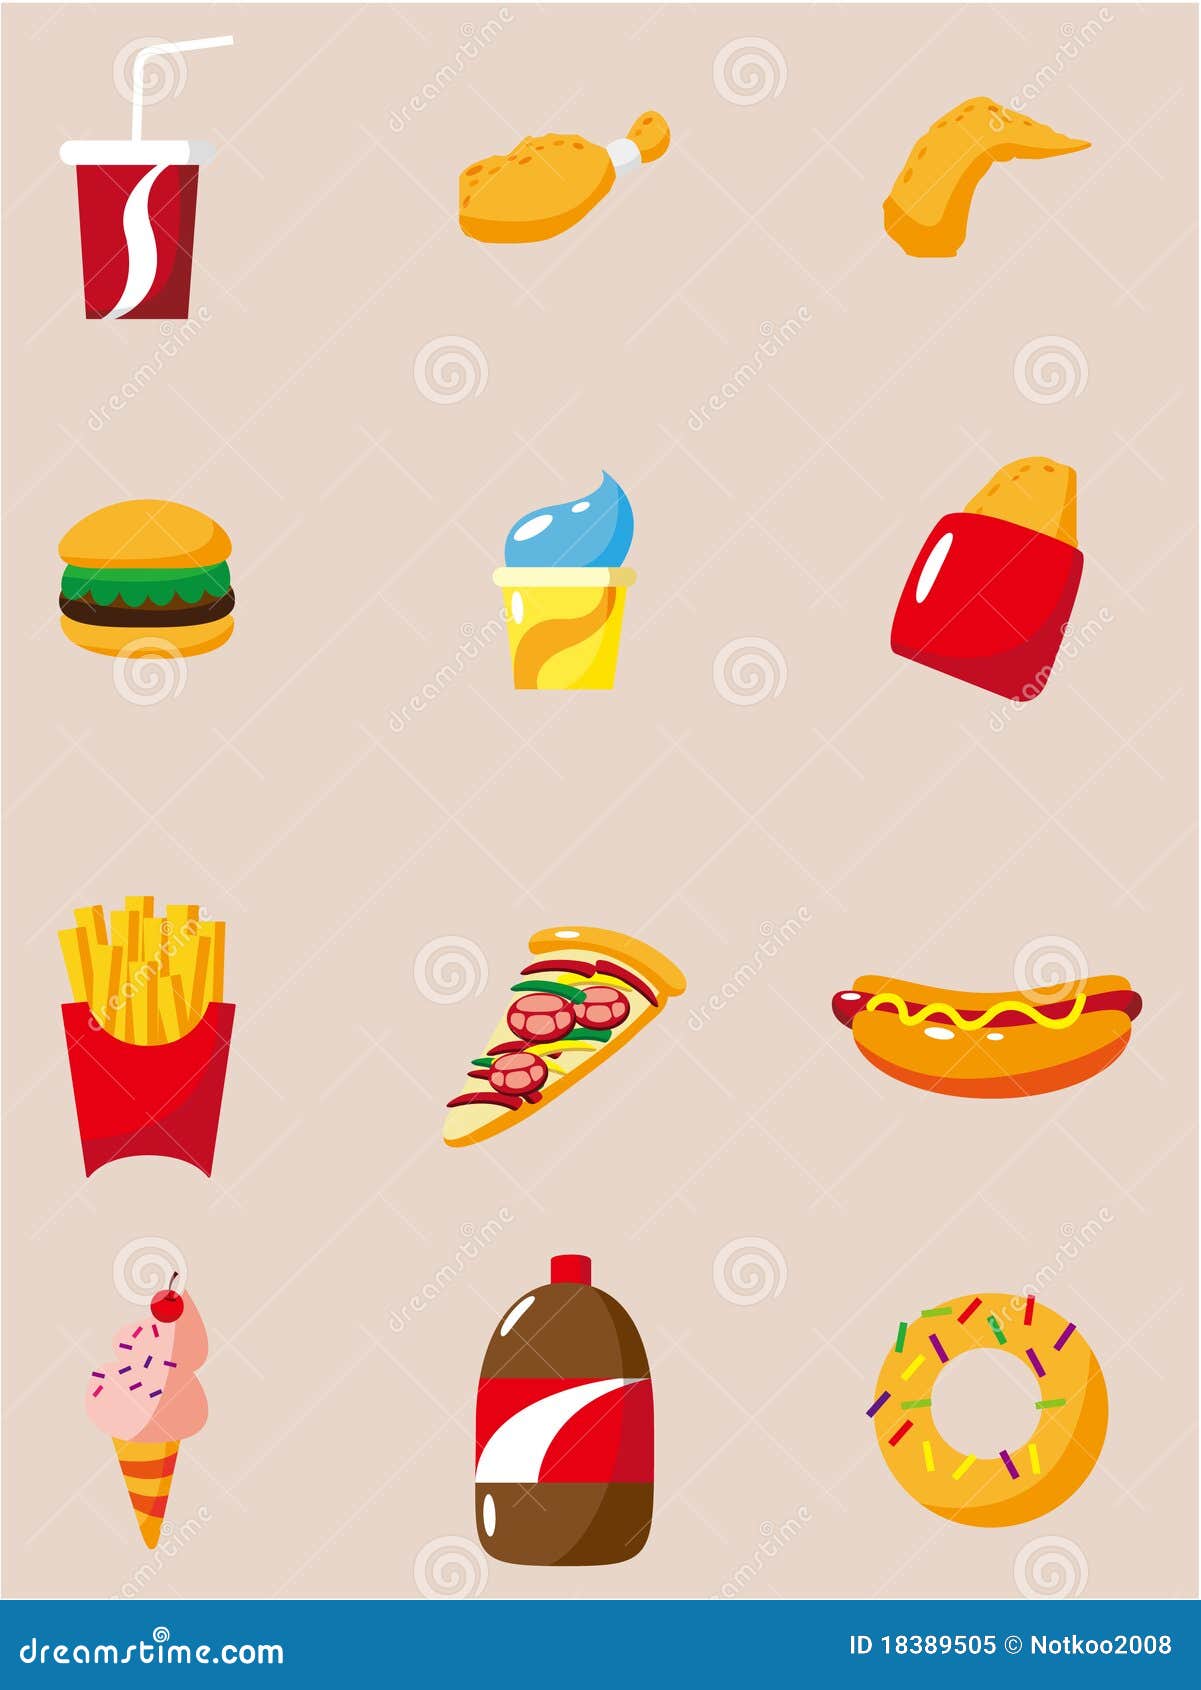 Cartoon Fast Food Icon Stock Vector Illustration Of Fast